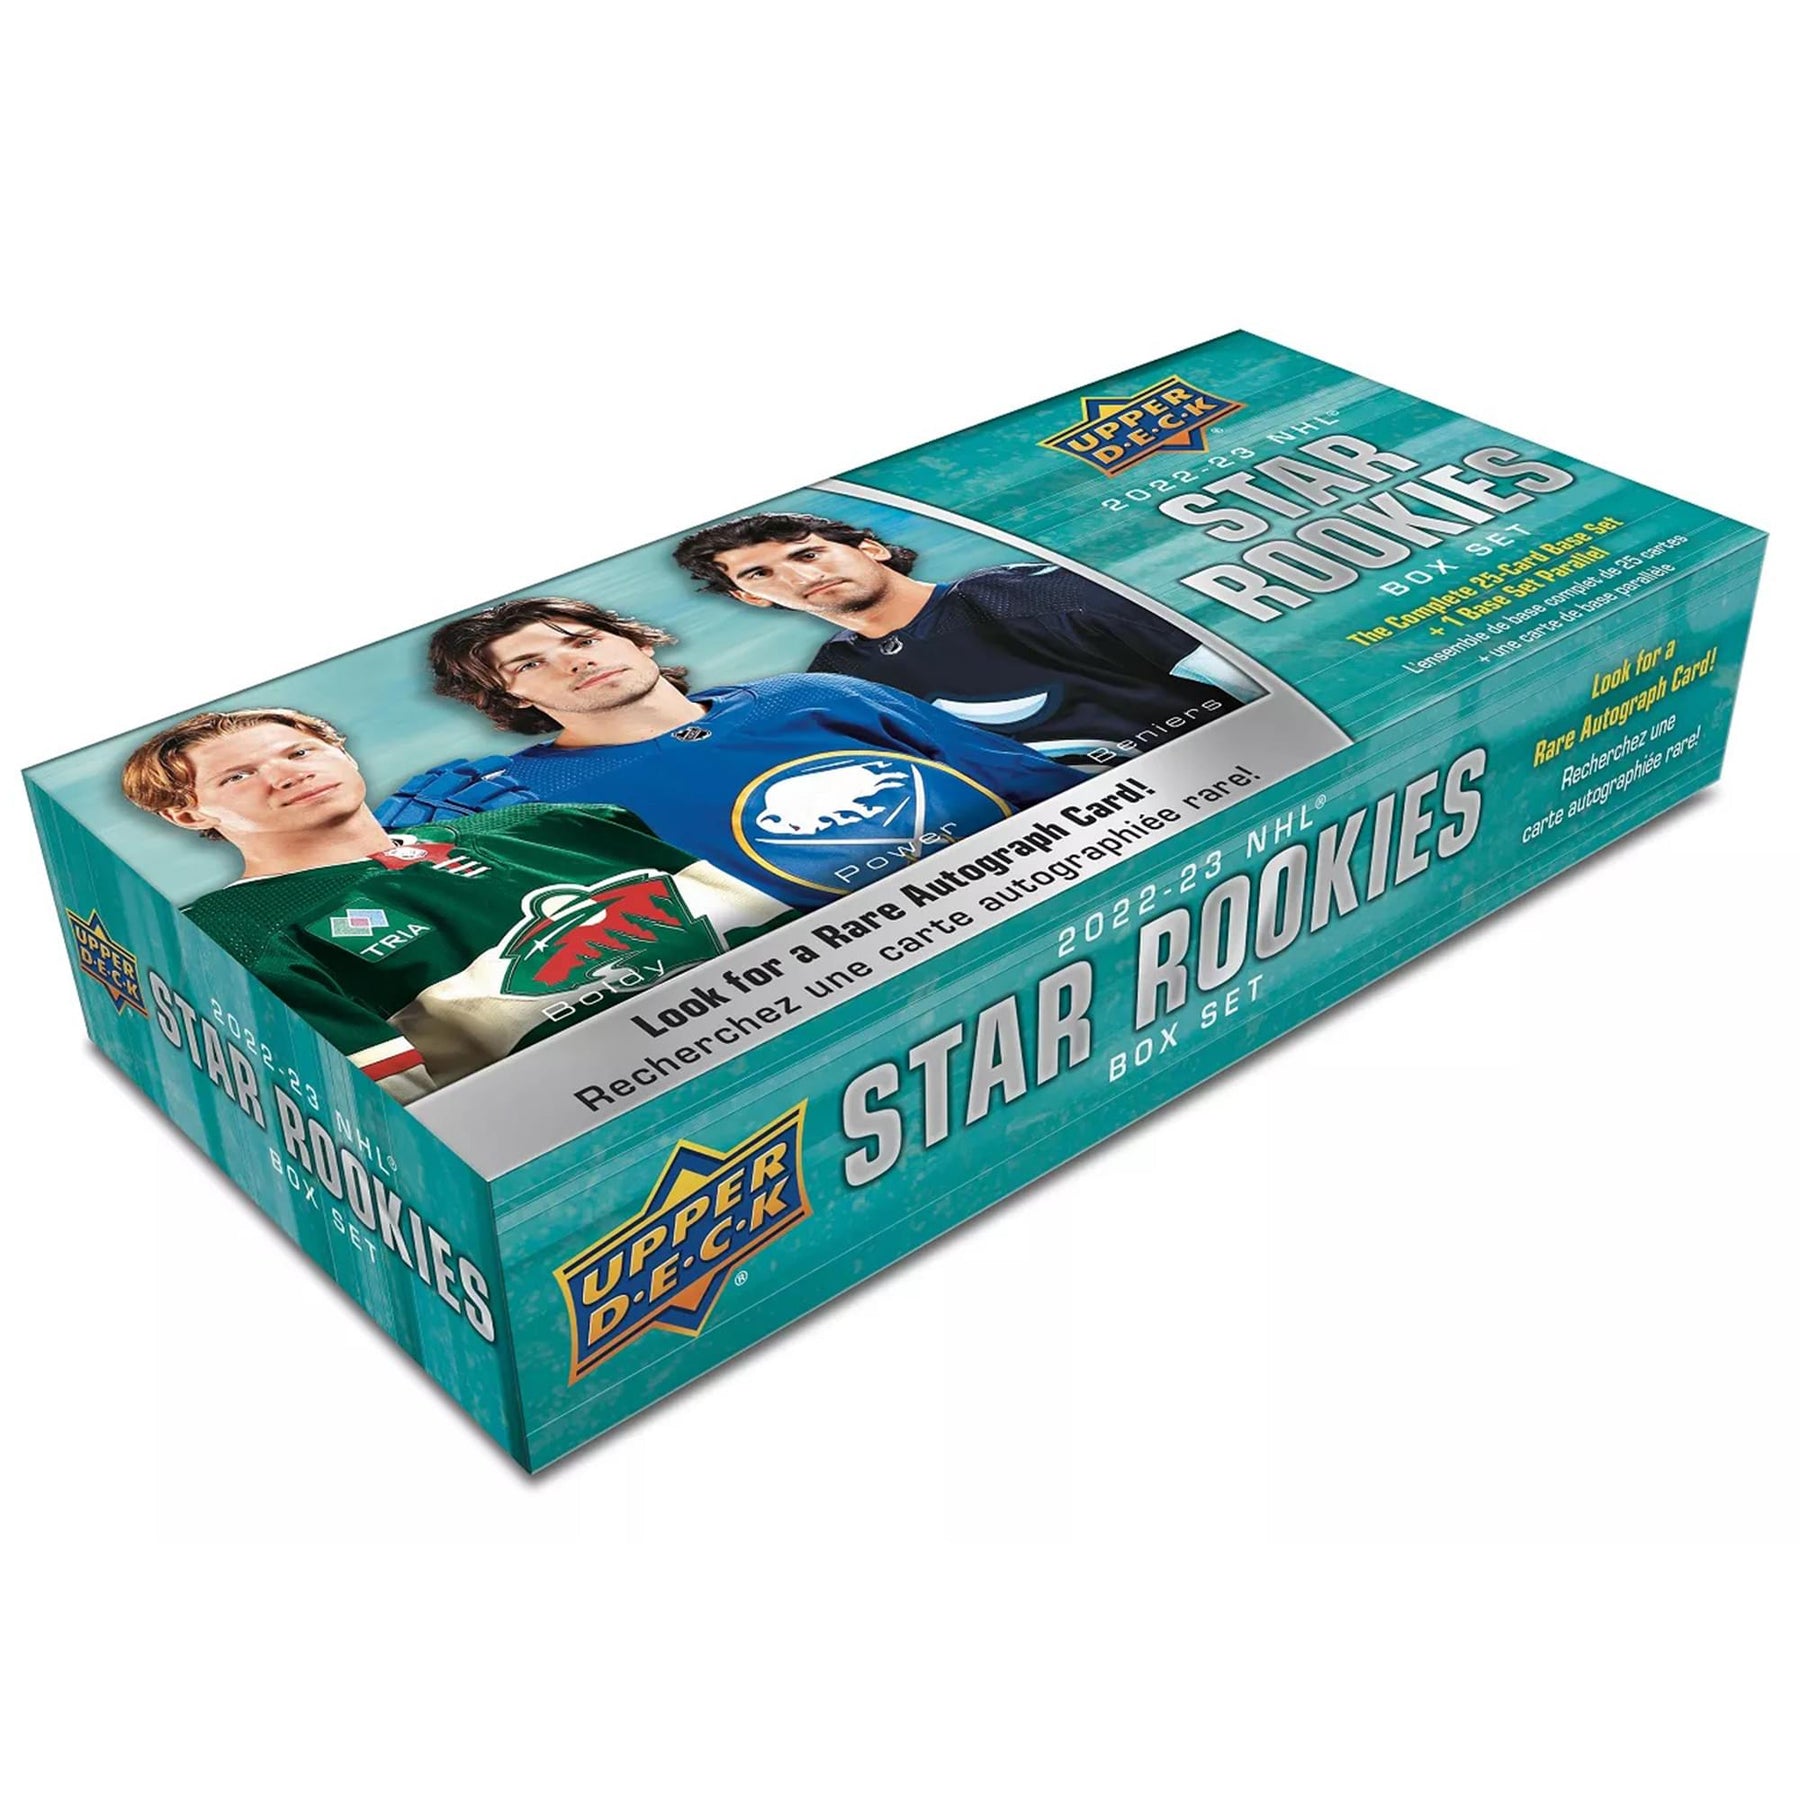 NHL 2022/23 Upper Deck Star Rookies Complete 25 Card Base Set